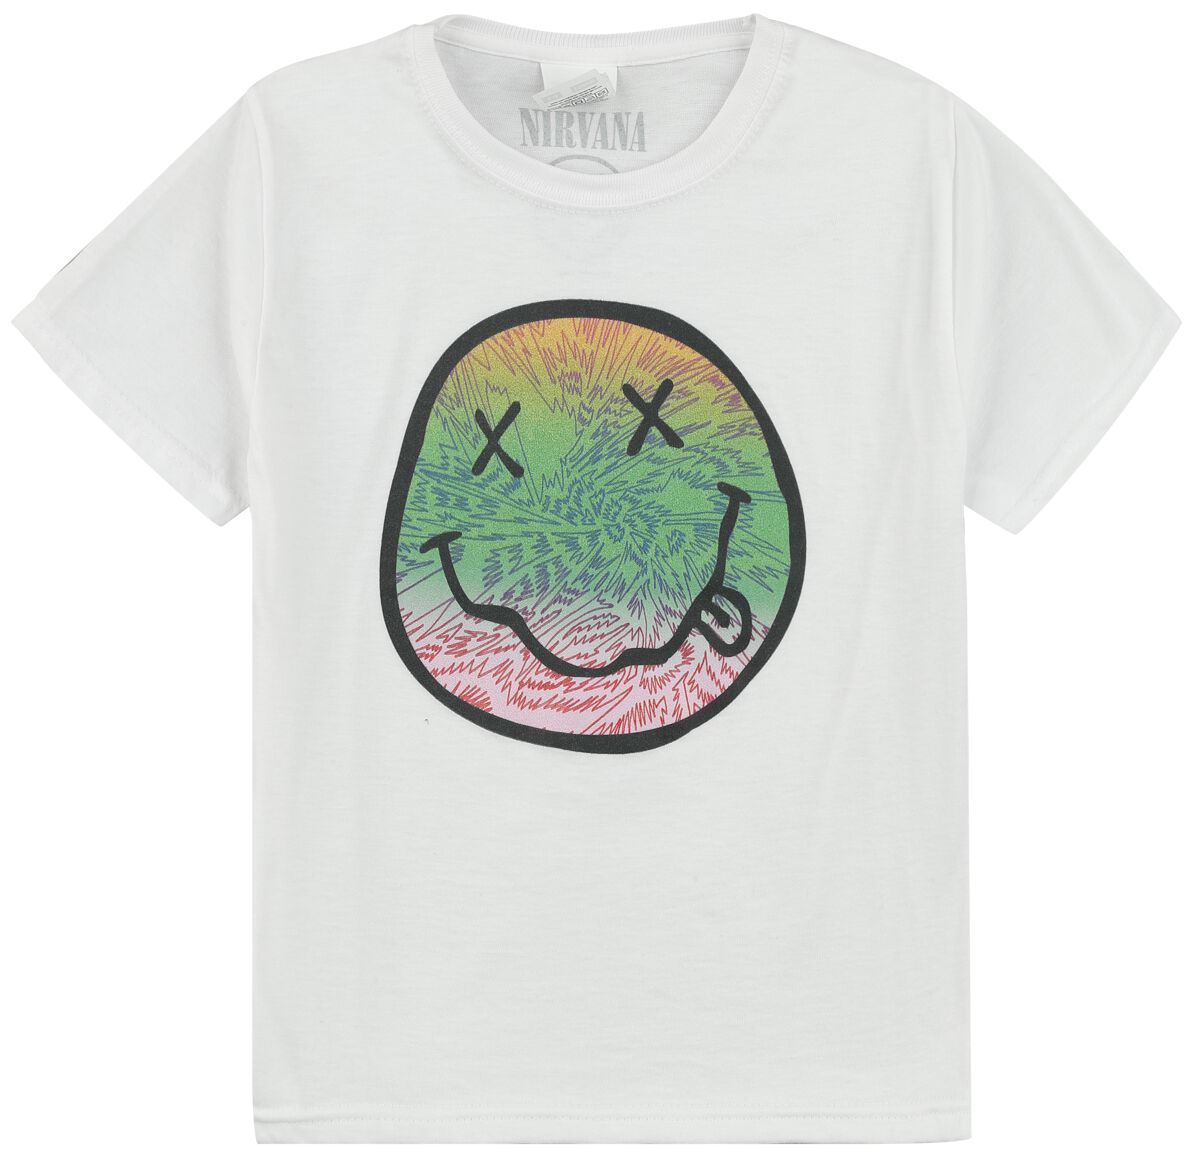 Nirvana Kids - Multicolor Smiley T-Shirt weiß in 104